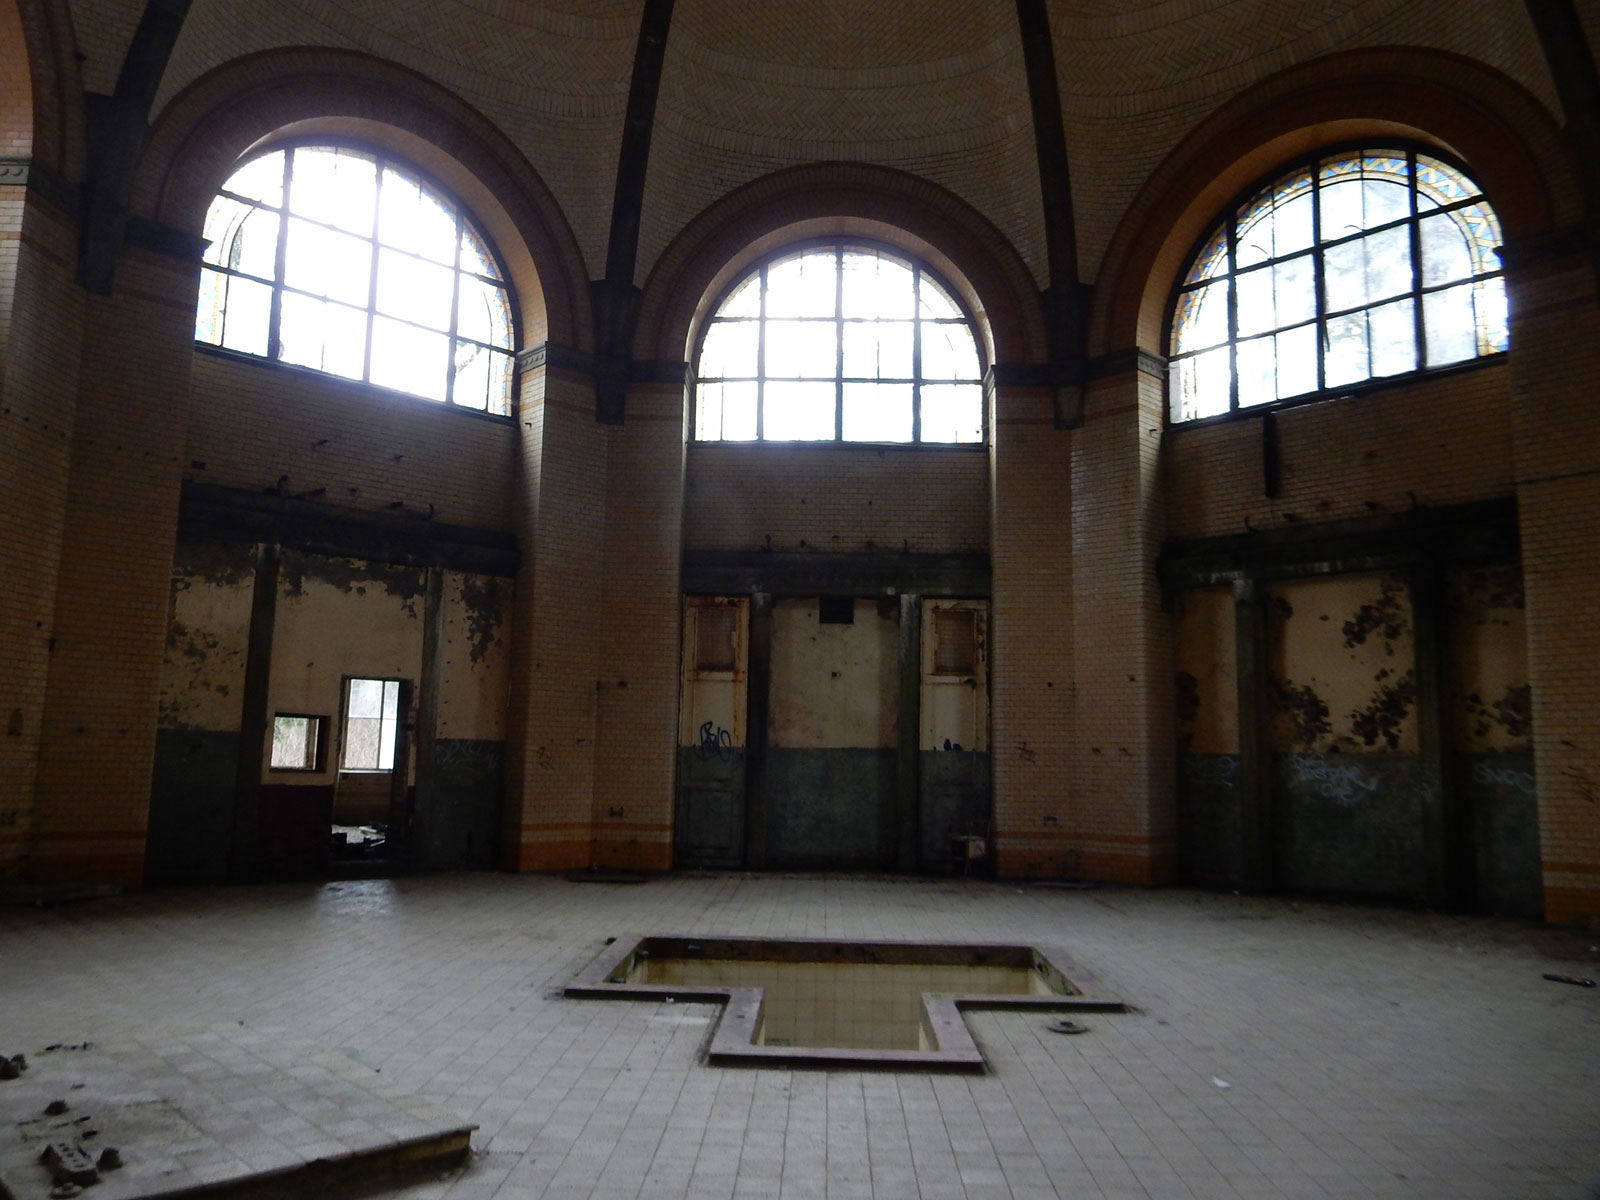 Fototour Beelitz Heilstätten